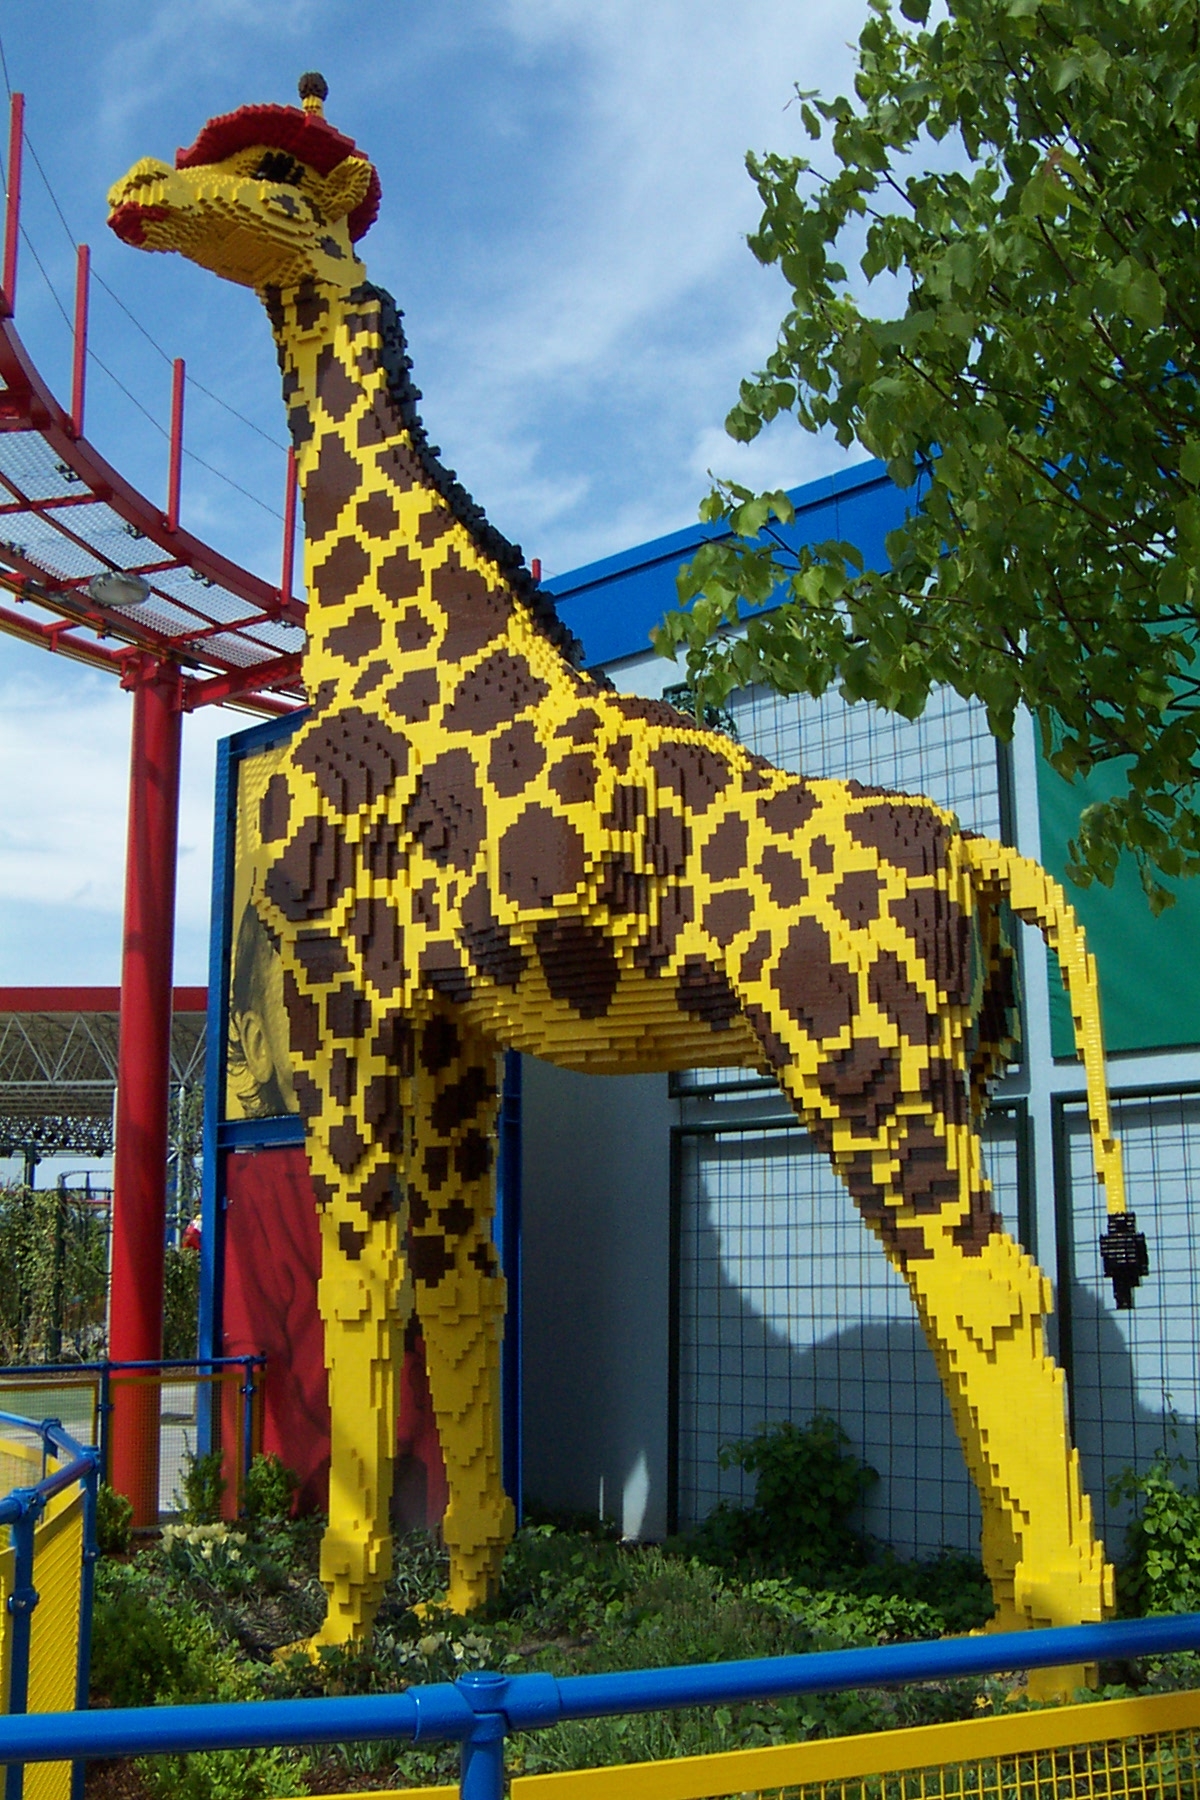 LEGOLAND Giraffe at the Pedal-A-Car